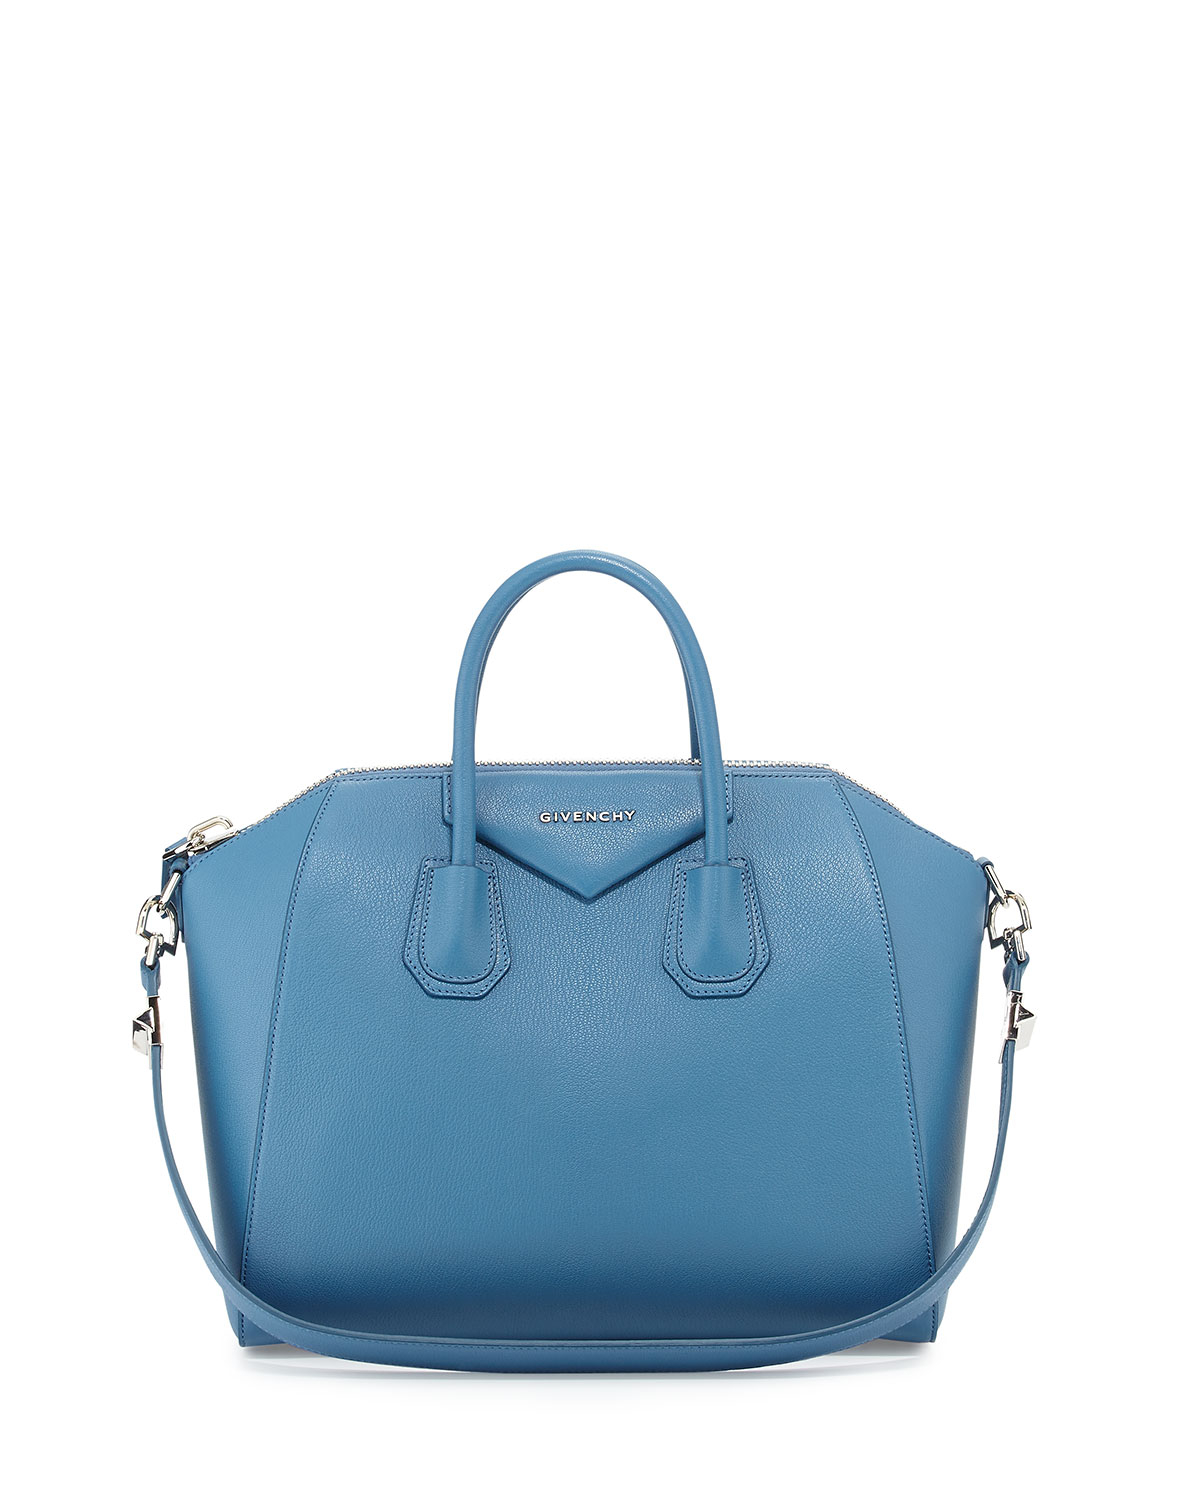 Givenchy Antigona Medium Sugar Satchel Bag in Blue (MEDIUM BLUE) | Lyst